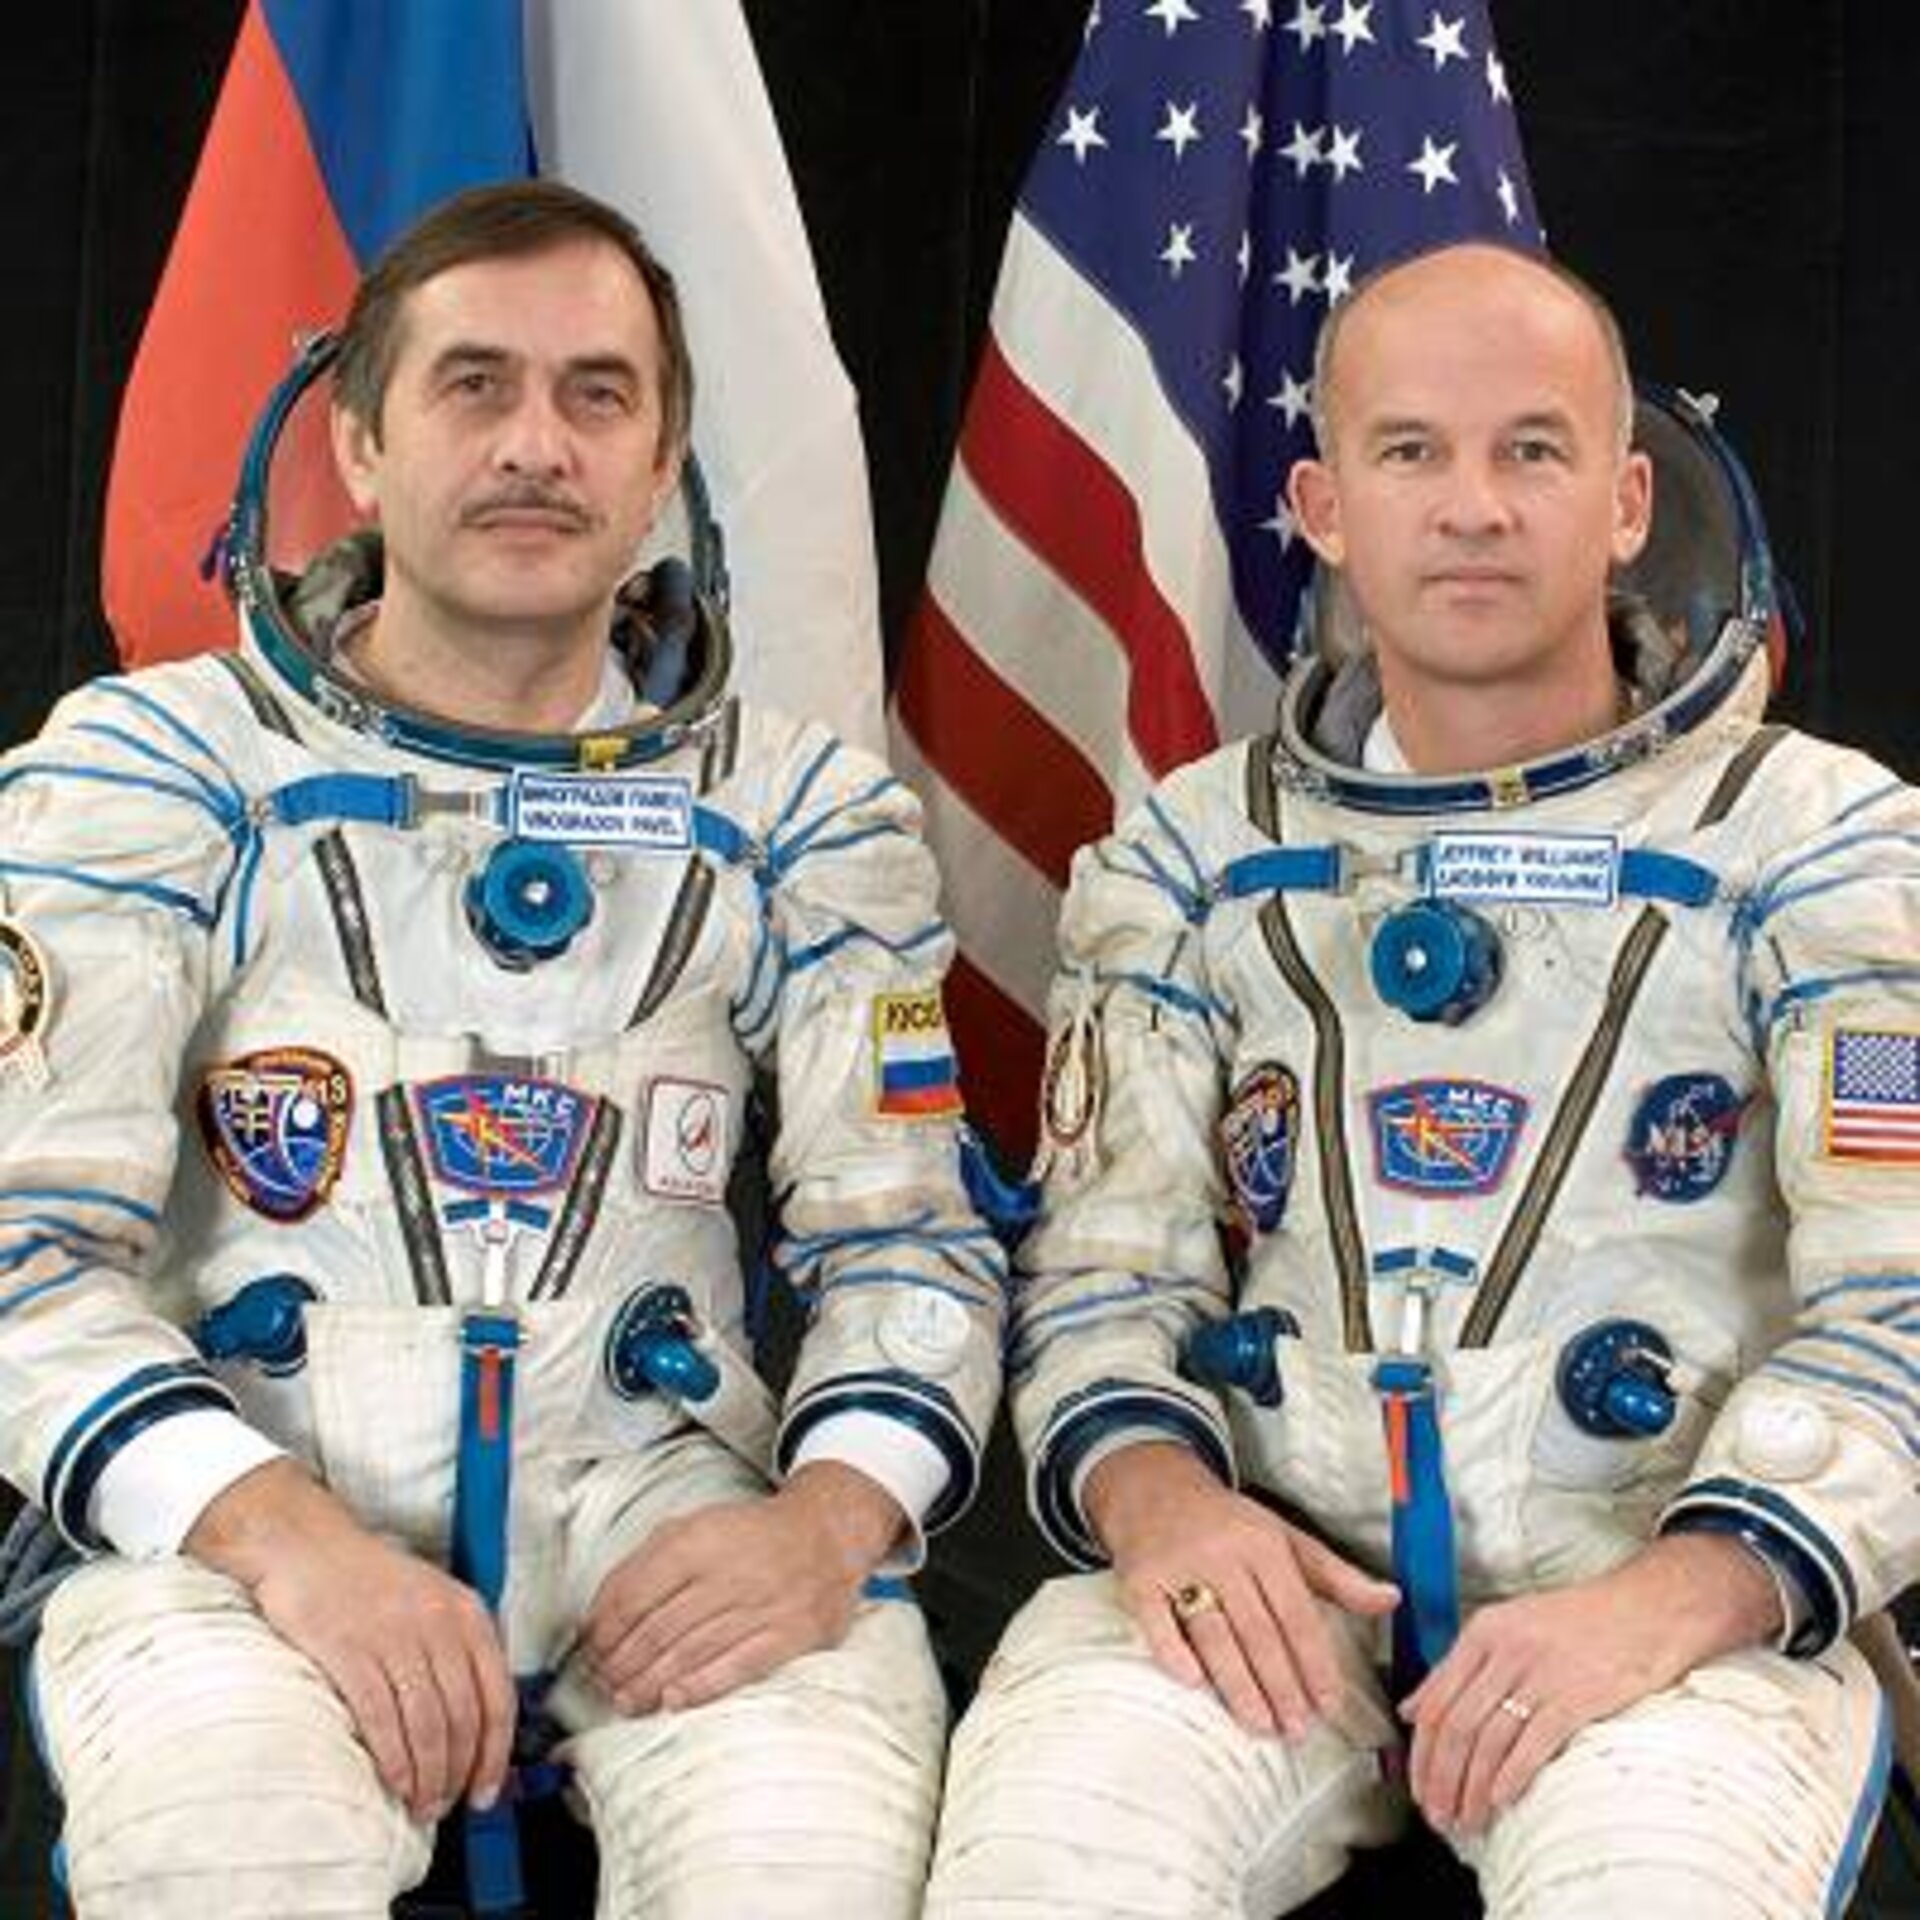 ISS Expedition 13 crew - Pavel Vinogradov and Jeffrey N. Williams